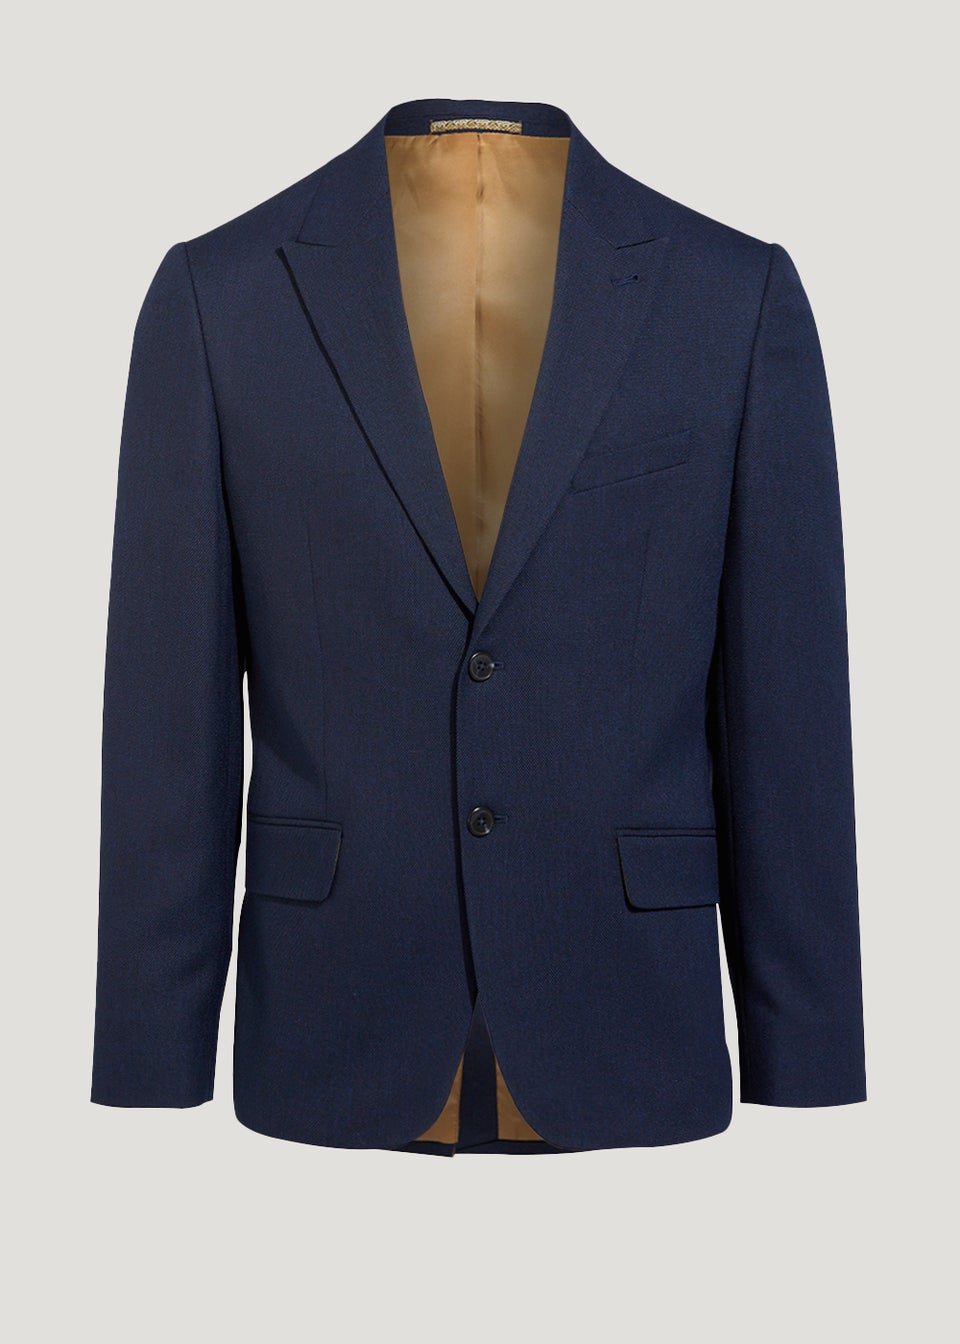 Taylor & Wright Bristol Navy Slim Fit Suit Jacket